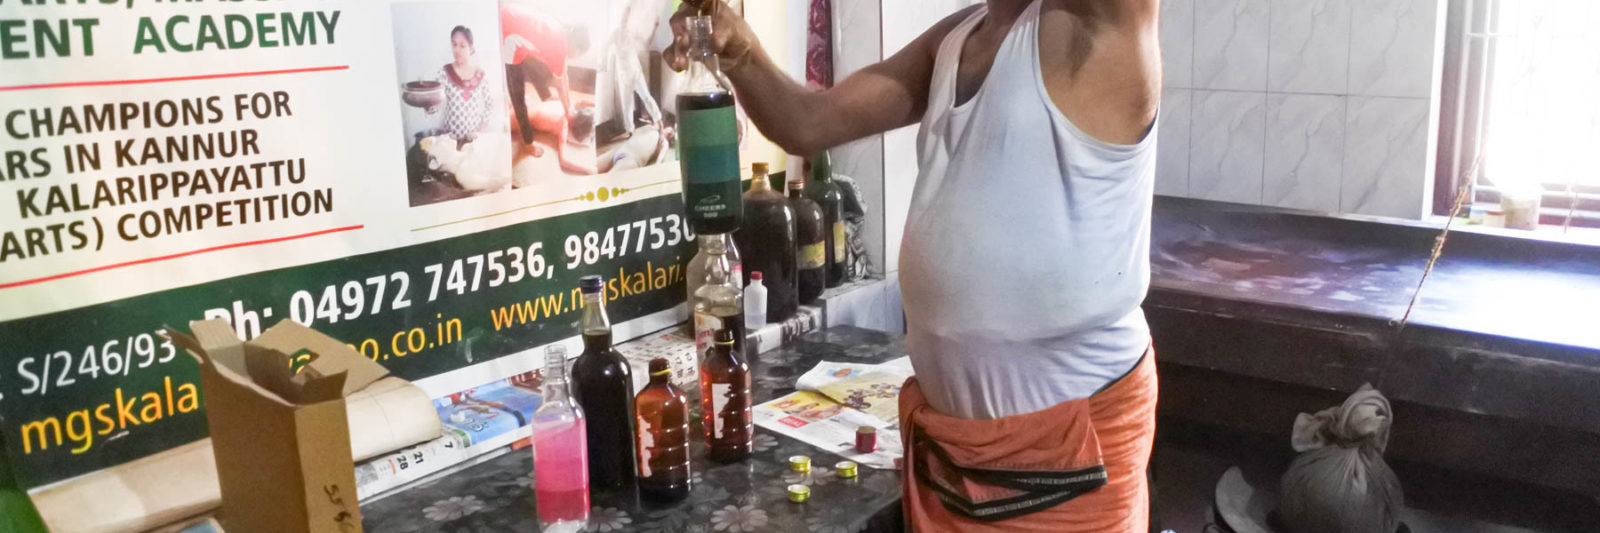 MGS Kalari Dineshan Gurukkal薬用オイルをボトルに詰めているところ